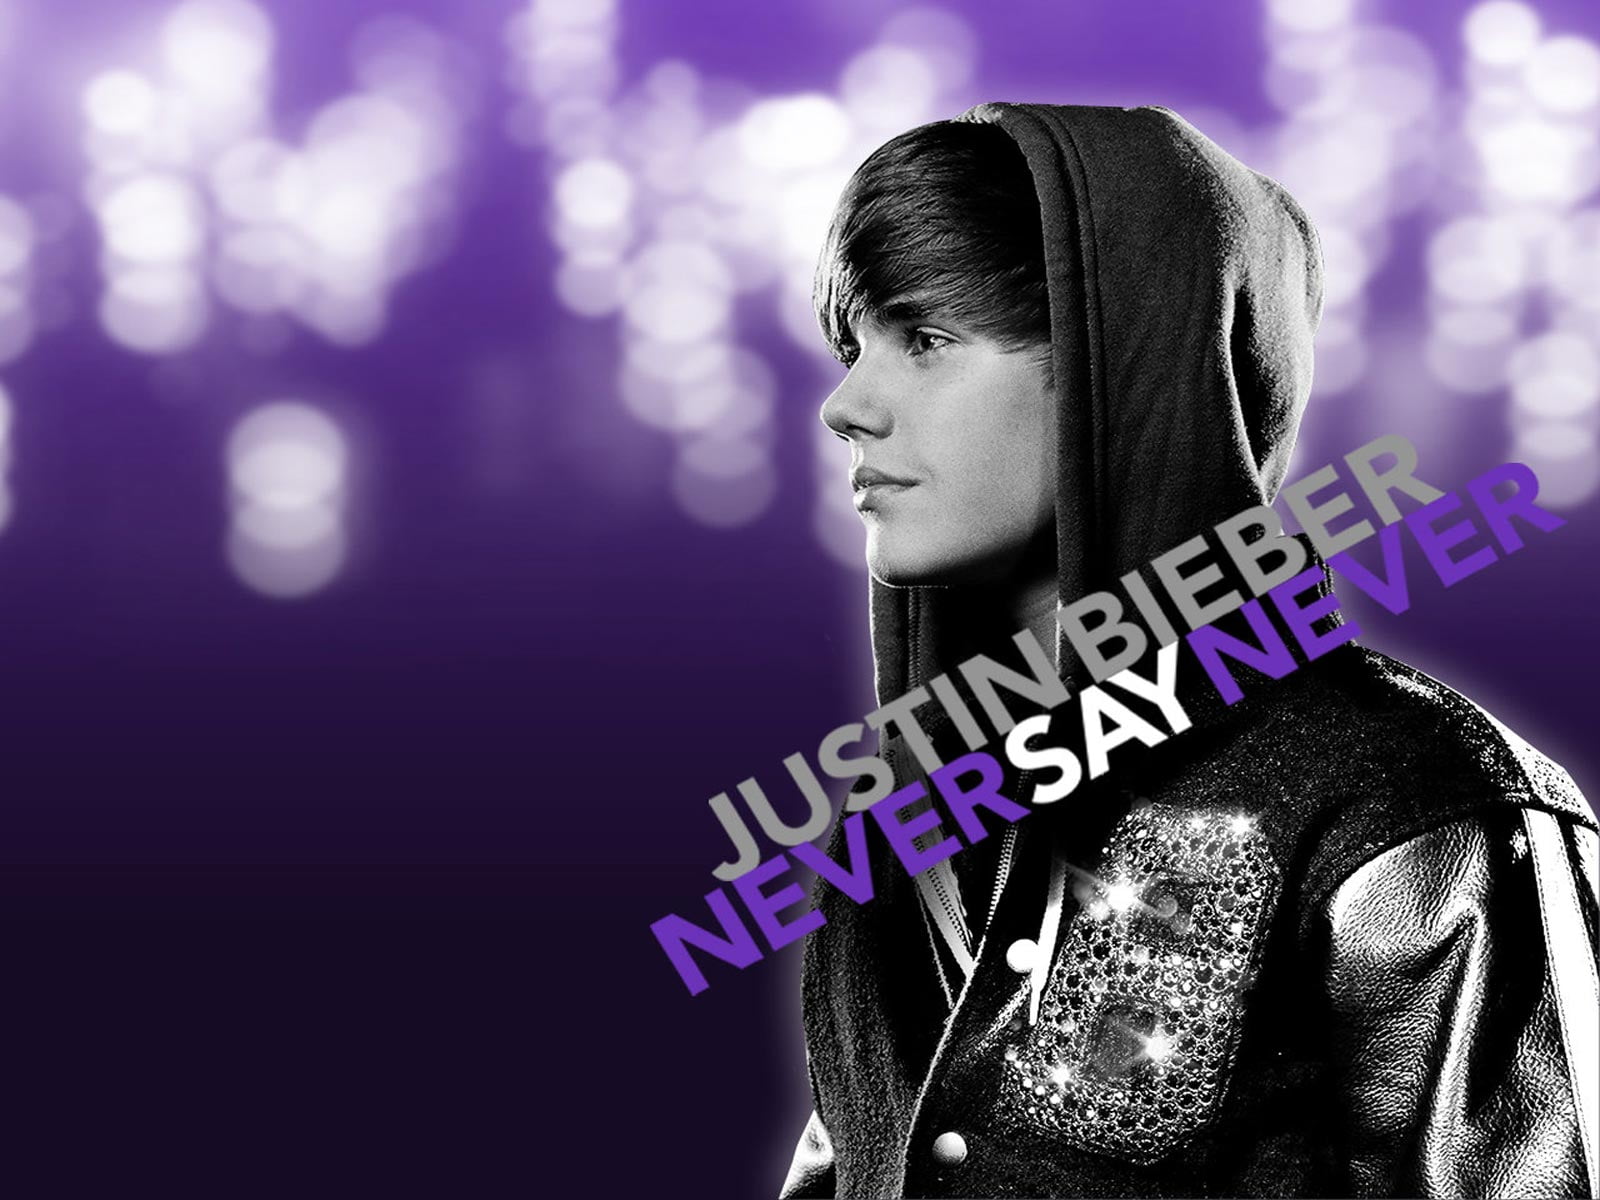 Justin Bieber Never Say Never, Justin Bieber Never Say Never album poster